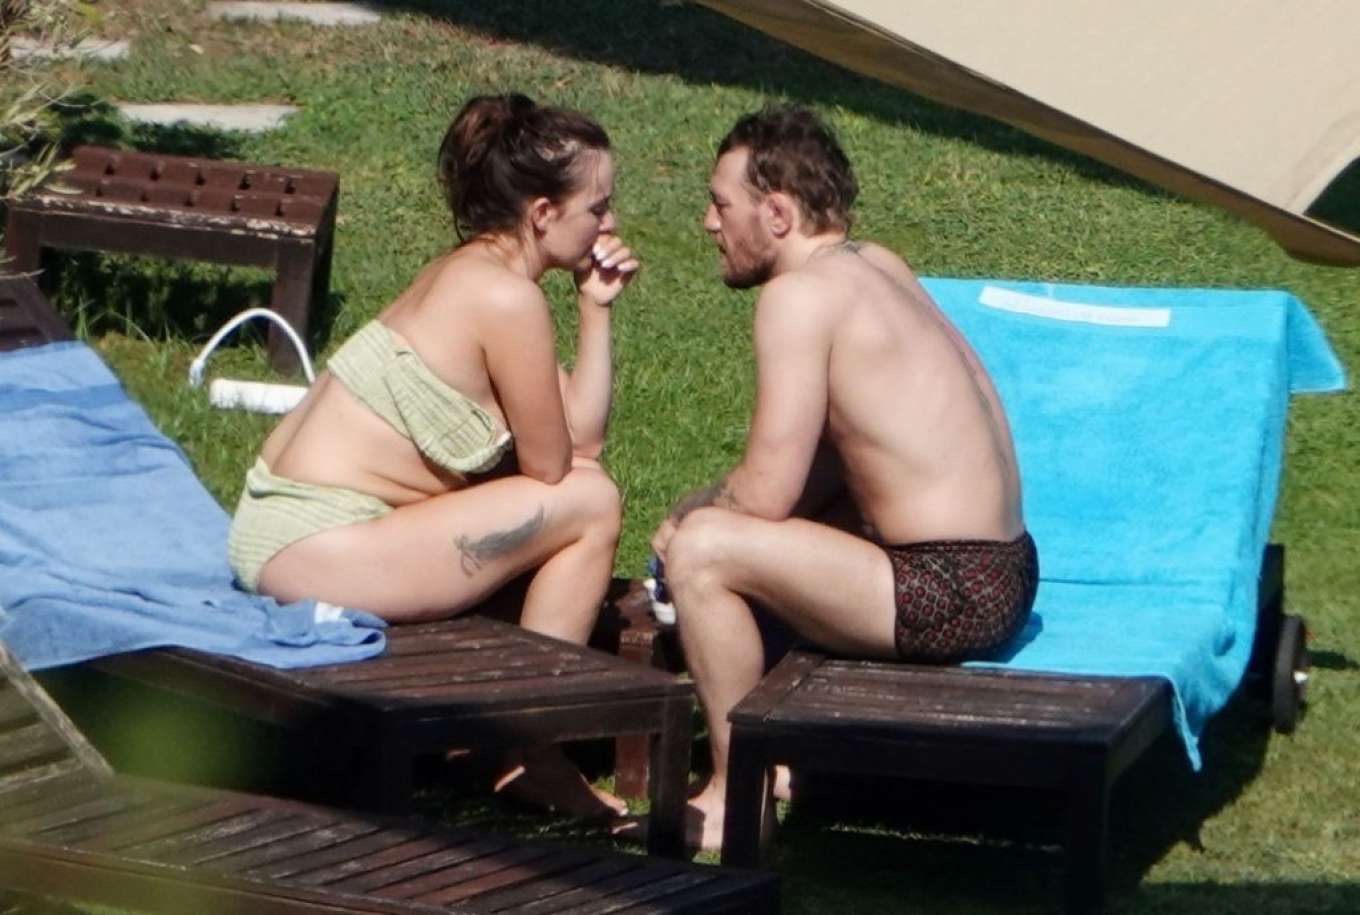 Dee Devlin 2019 : Conor McGregor and Dee Devlin - In bikini on a vacation o...